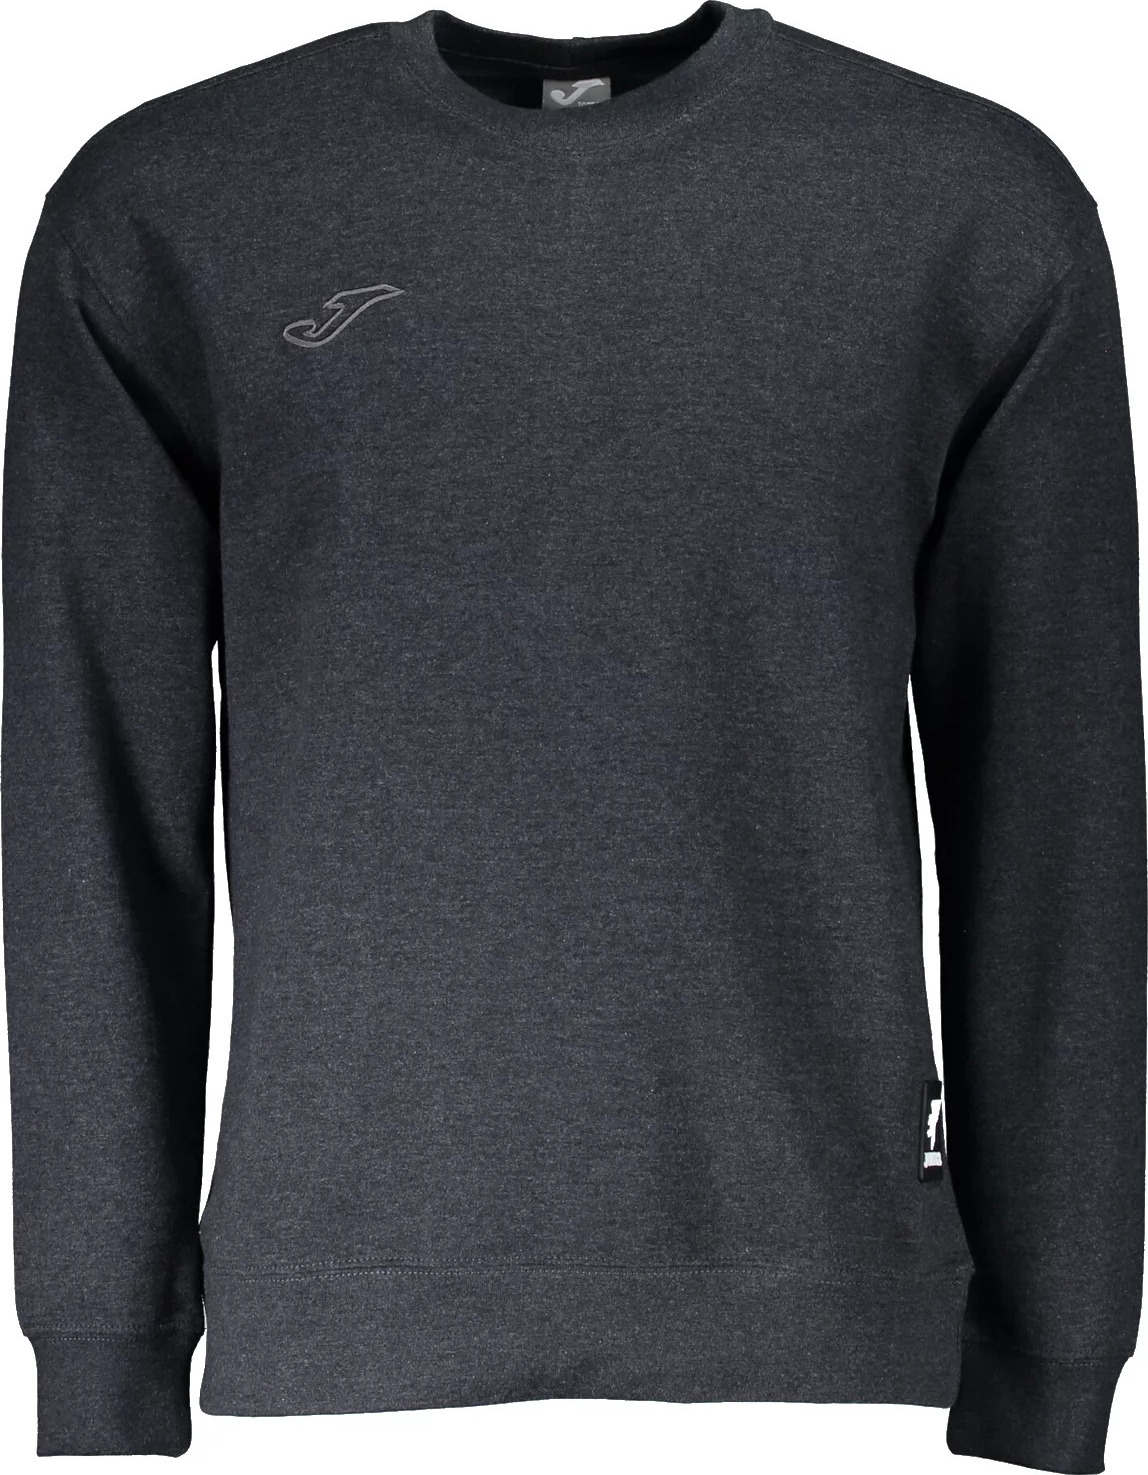 Tmavě šedá pánská mikina Joma Urban Street Sweatshirt 102880-150 Velikost: L